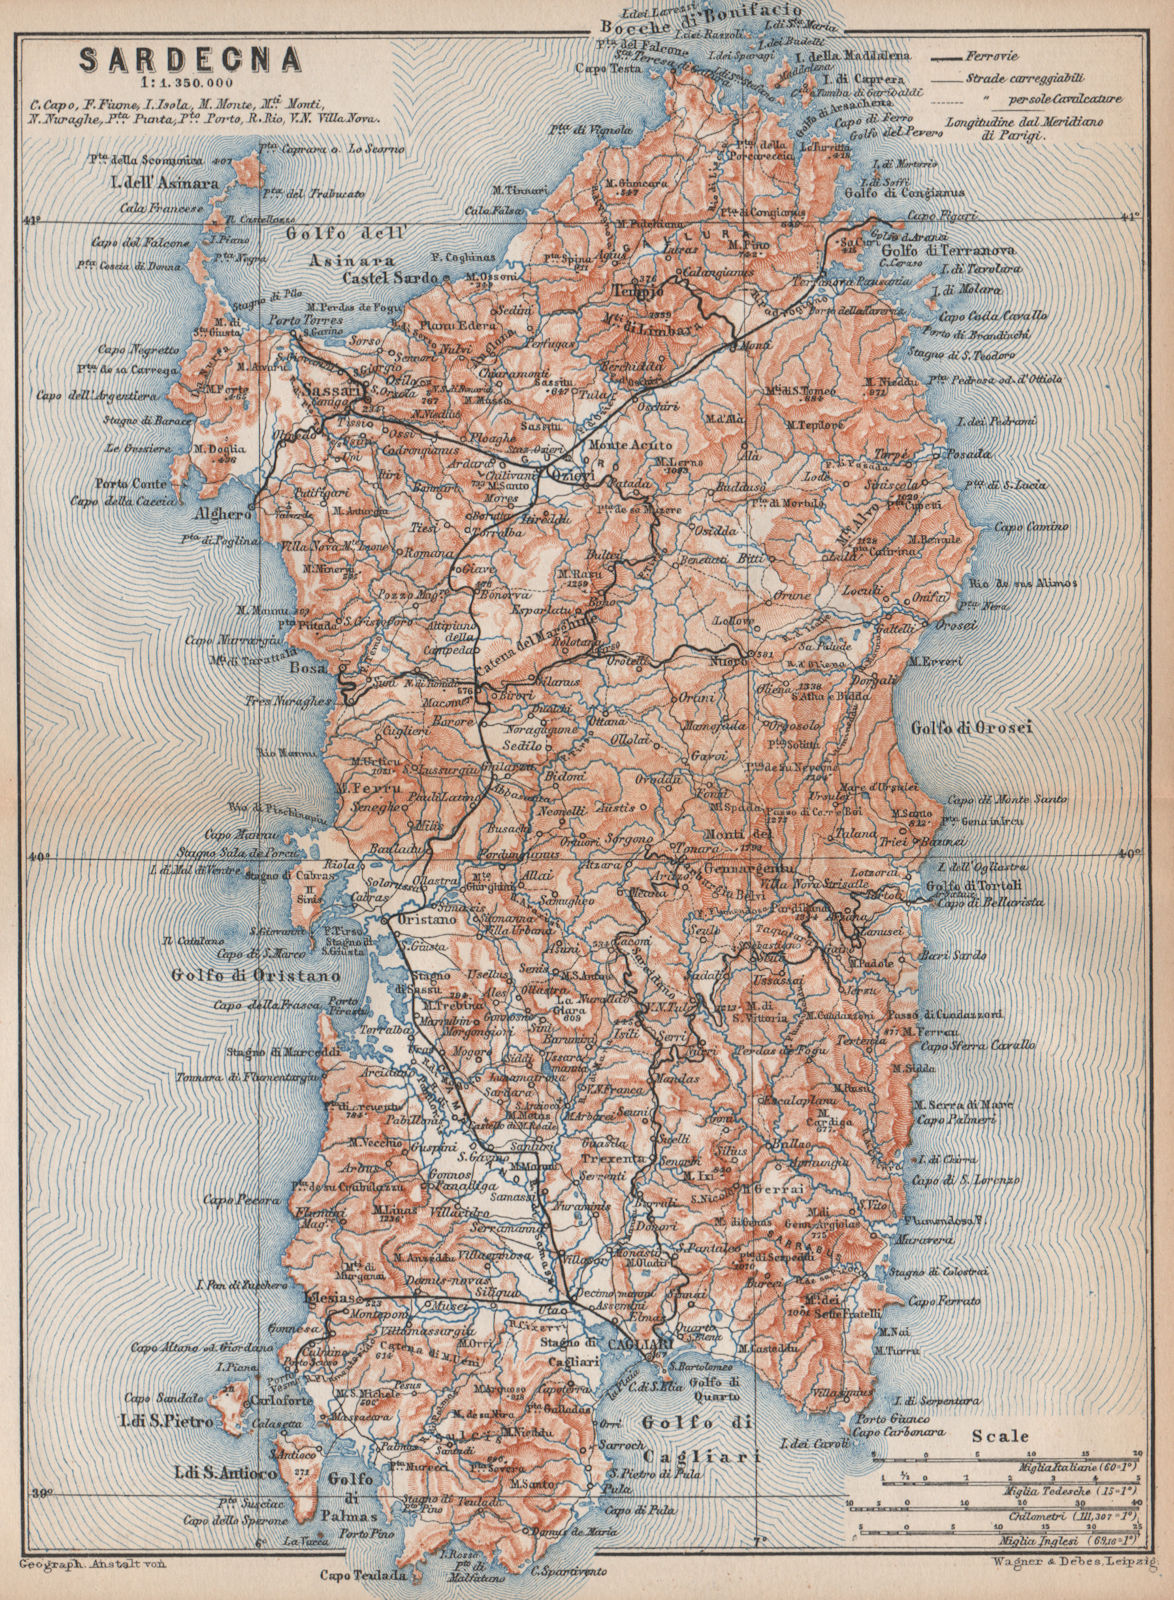 SARDINIA SARDEGNA. Italy mappa. BAEDEKER 1896 old antique plan chart